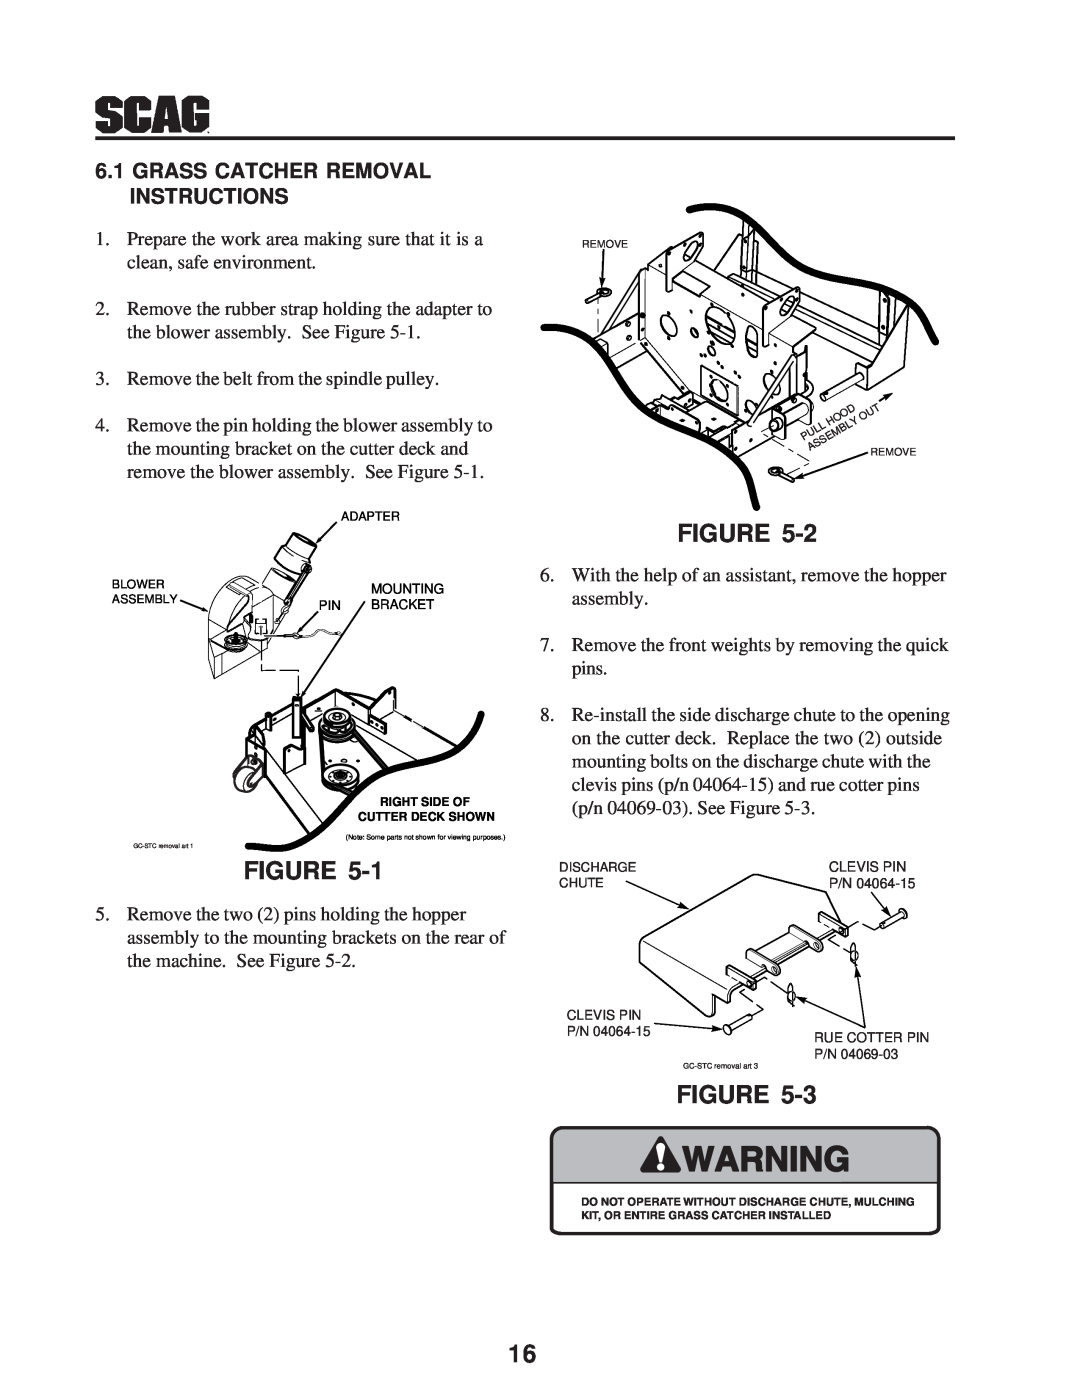 Scag Power Equipment GC-STT-CS manual Grass Catcher Removal Instructions 